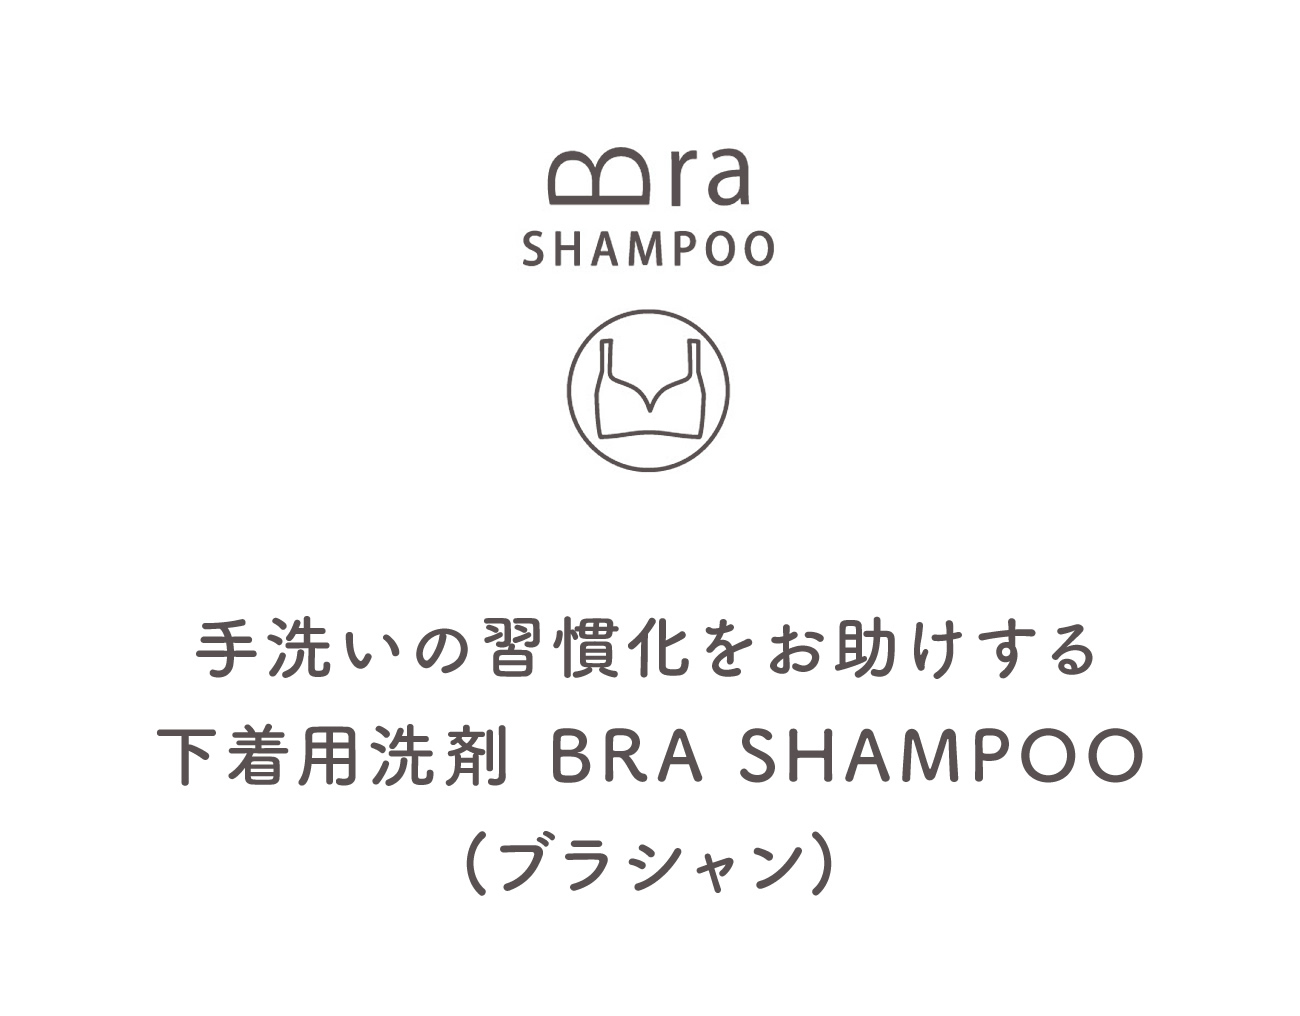 BRA SHAMPOO　手洗いの習慣化をお助けする下着用洗剤 BRA SHAMPOO(ブラシャン)